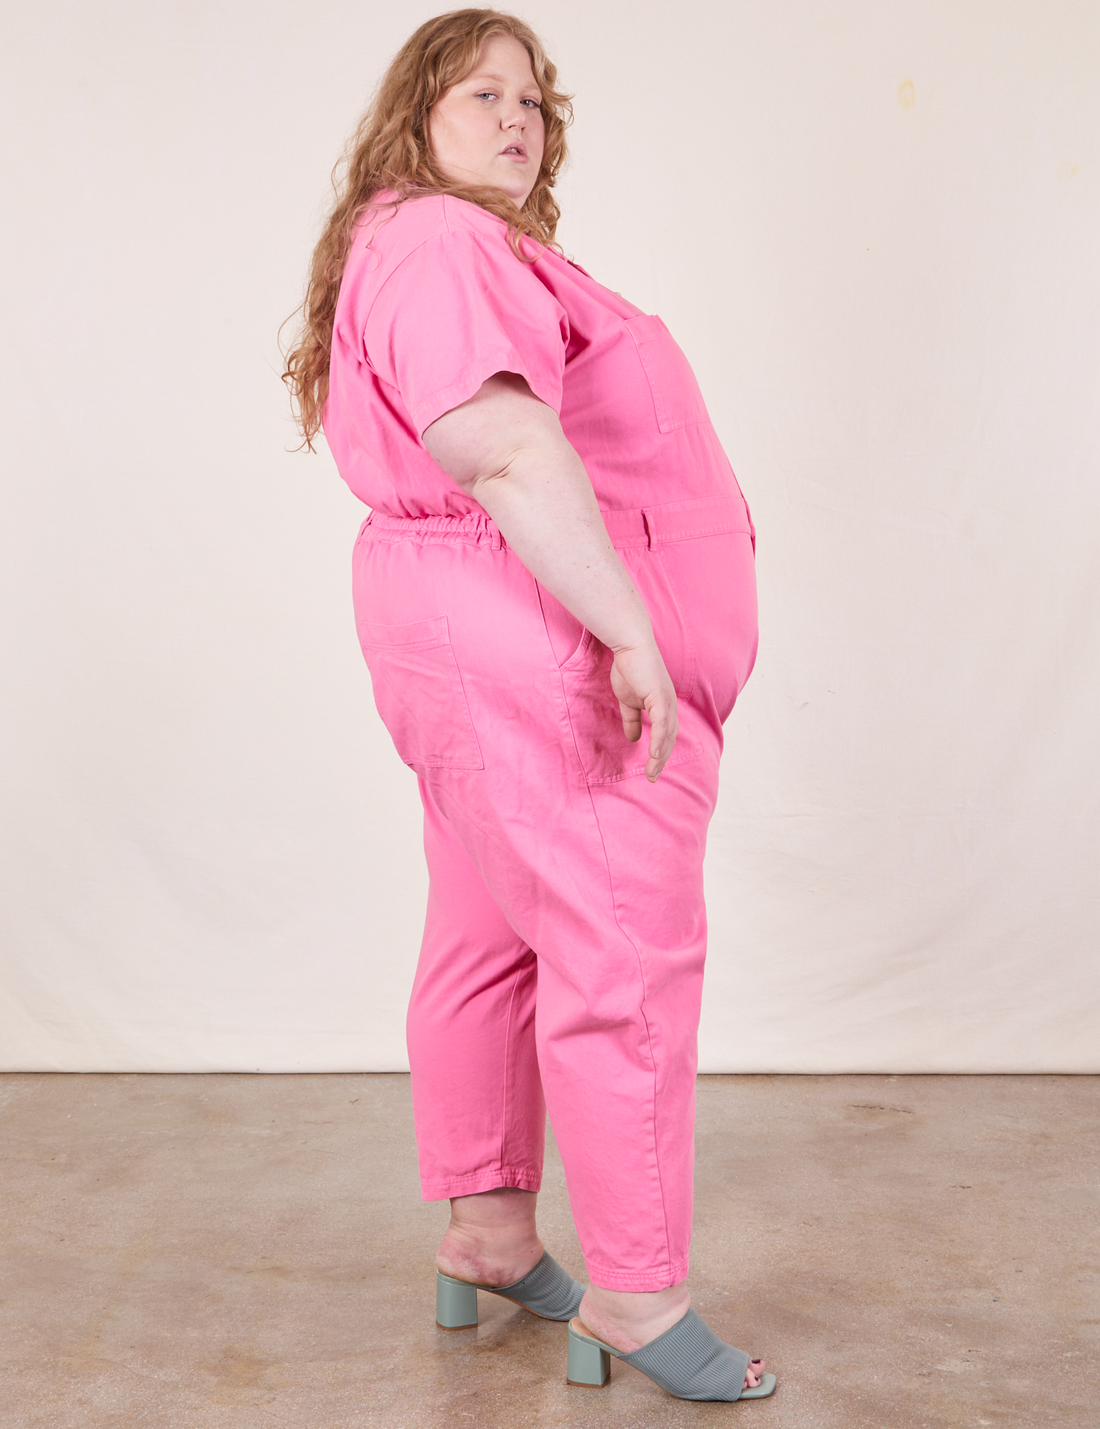 Short Sleeve Jumpsuit in Bubblegum Pink side view on Catie